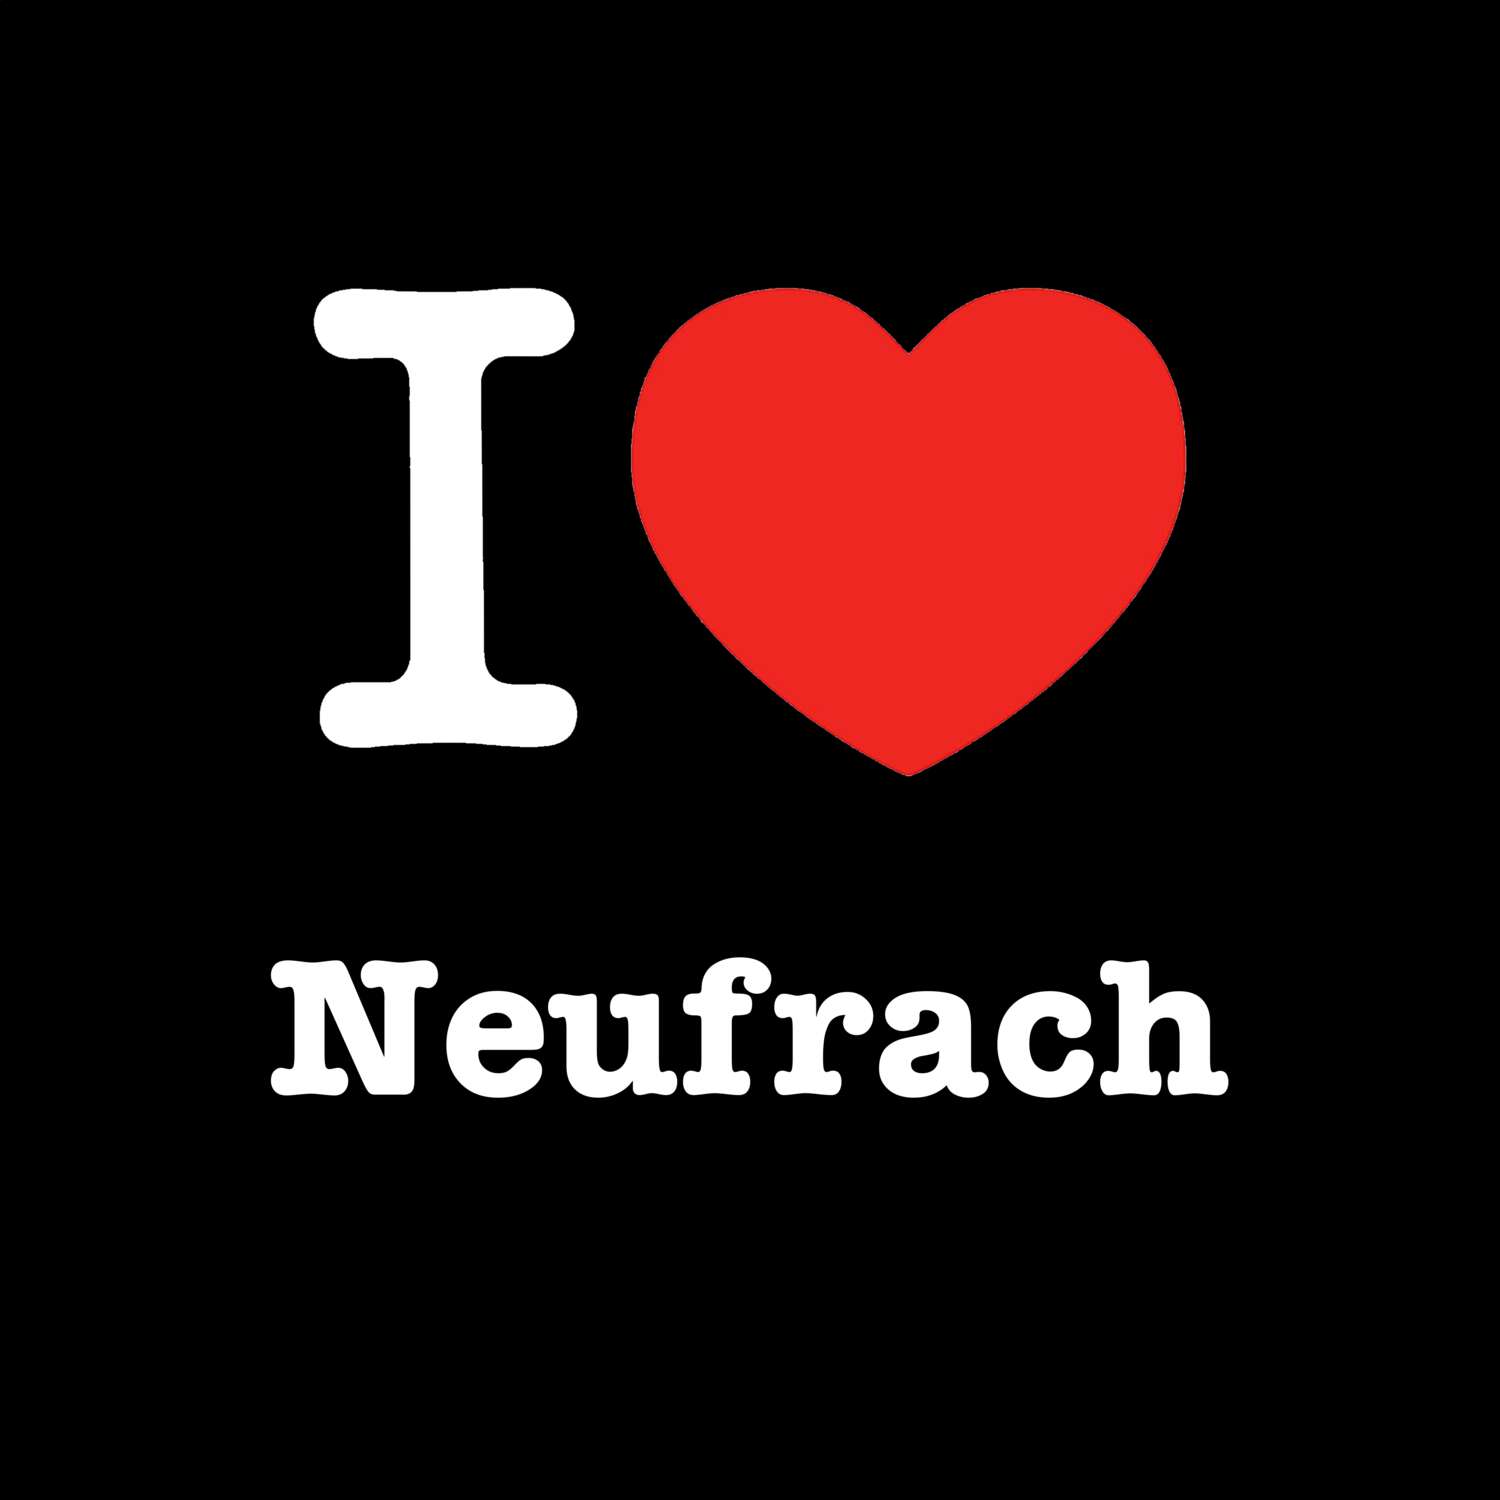 Neufrach T-Shirt »I love«